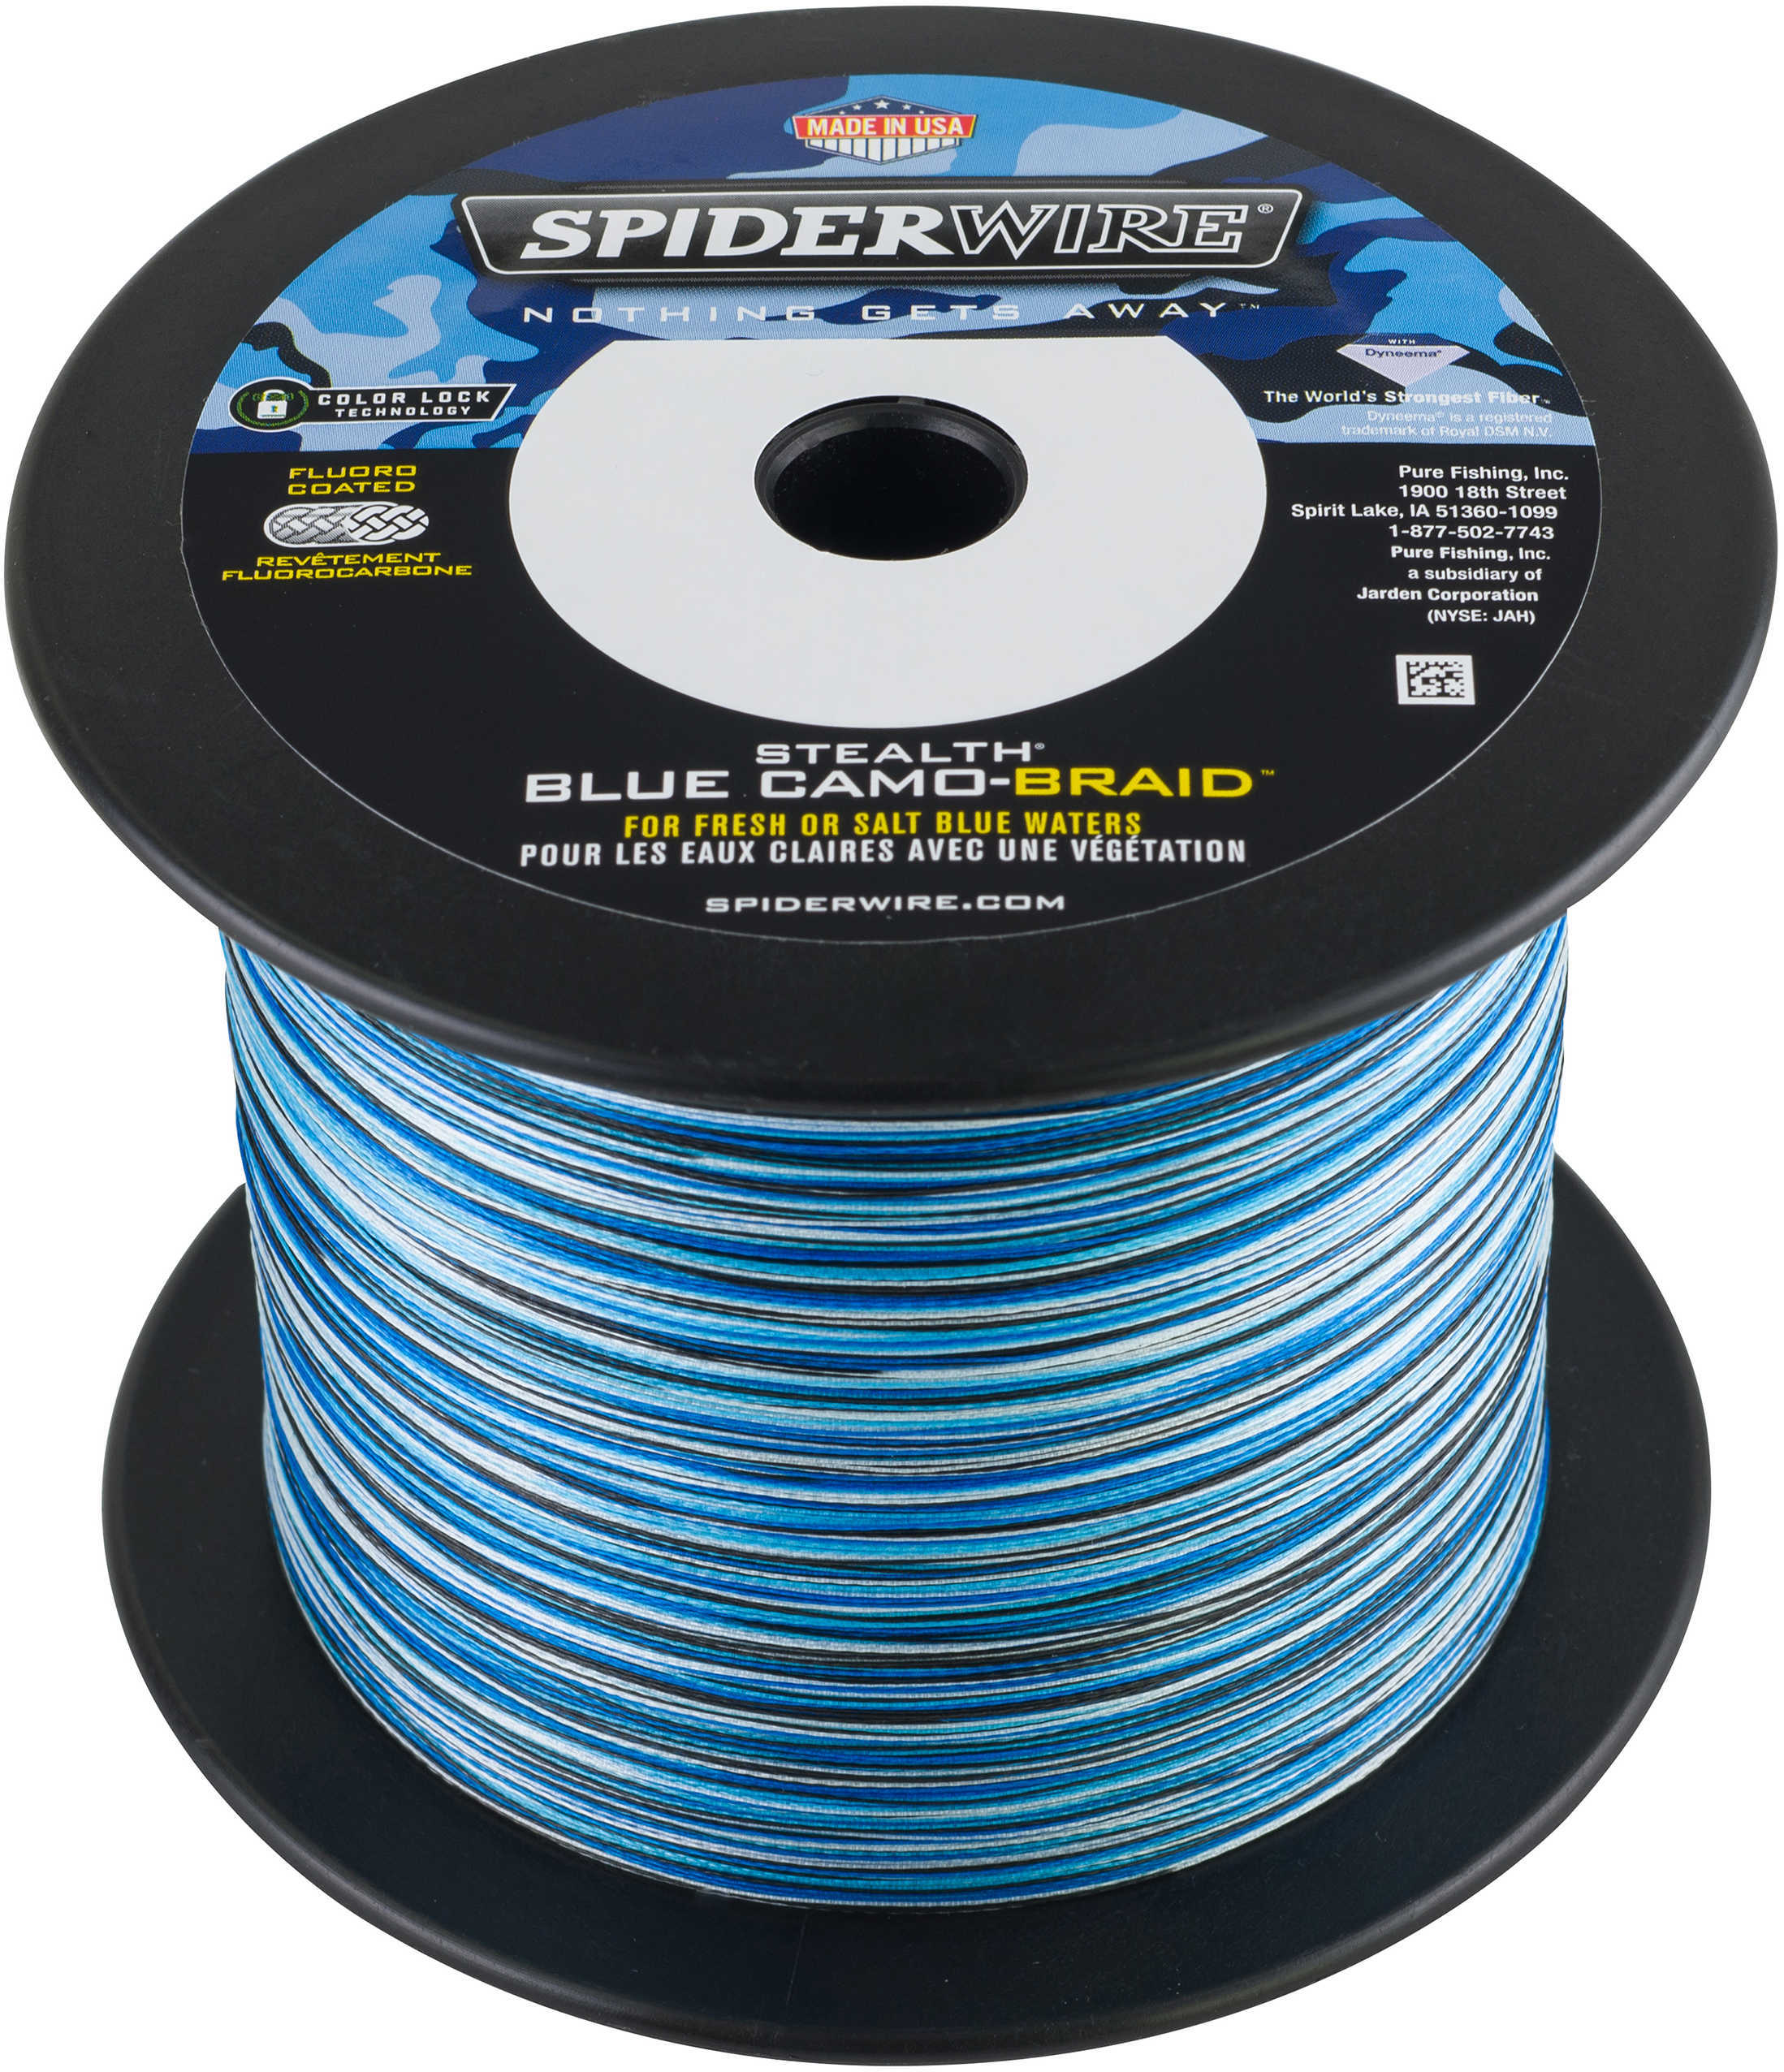 Spiderwire Stealth Braid 1500 Yards , 30 lbs Strength, 0.012" Diameter, Blue Camo Md: 1370456